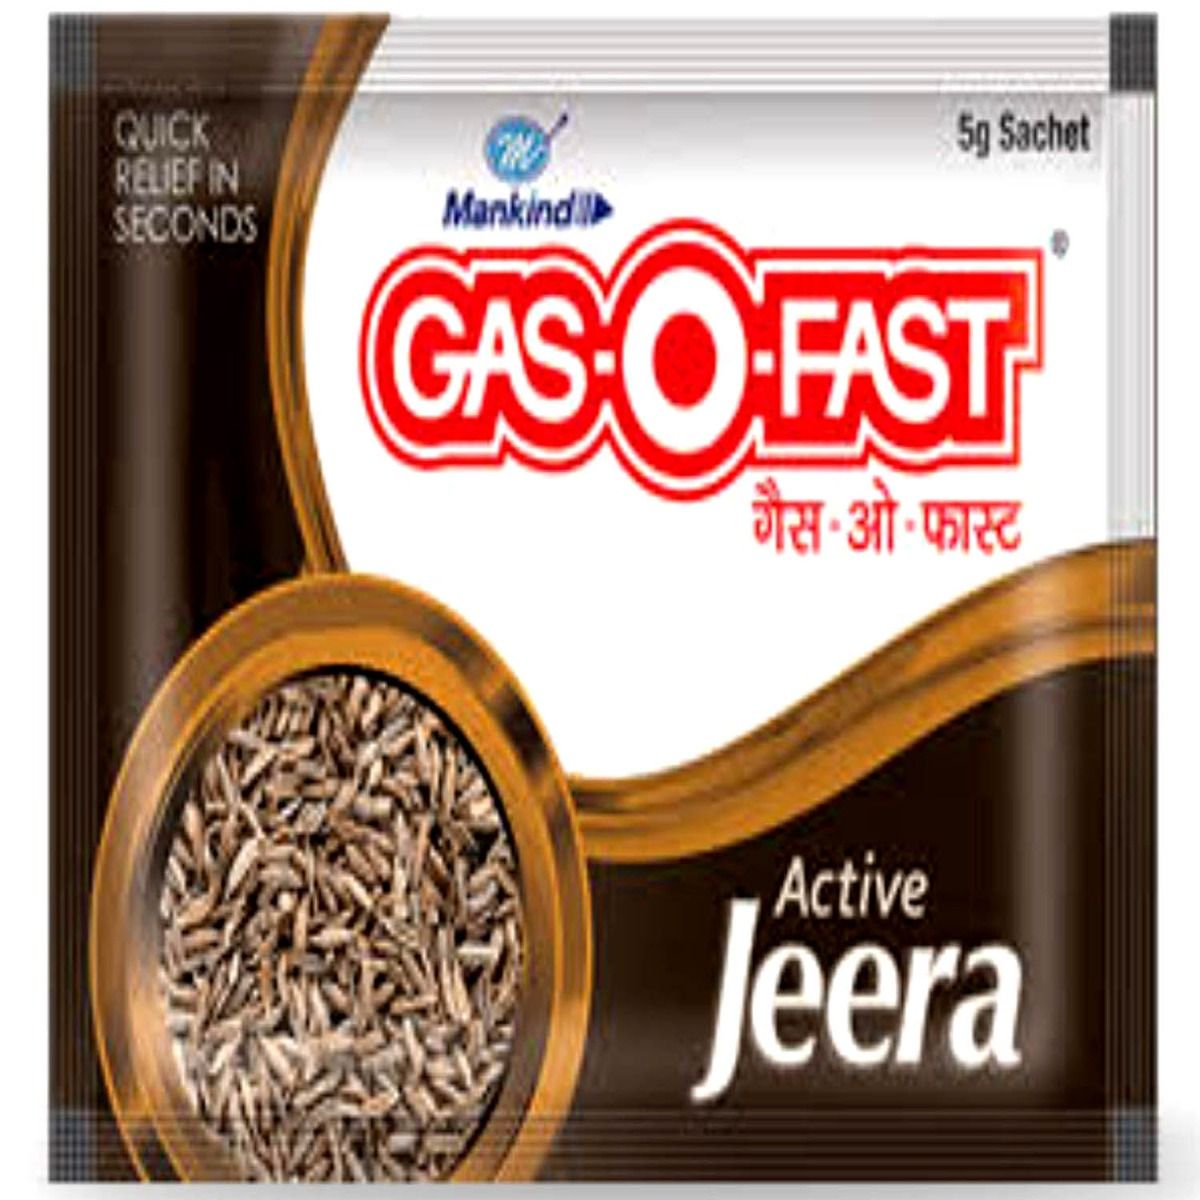 Buy Gas-O-Fast Active Jeera Sachet, 5 gm Online